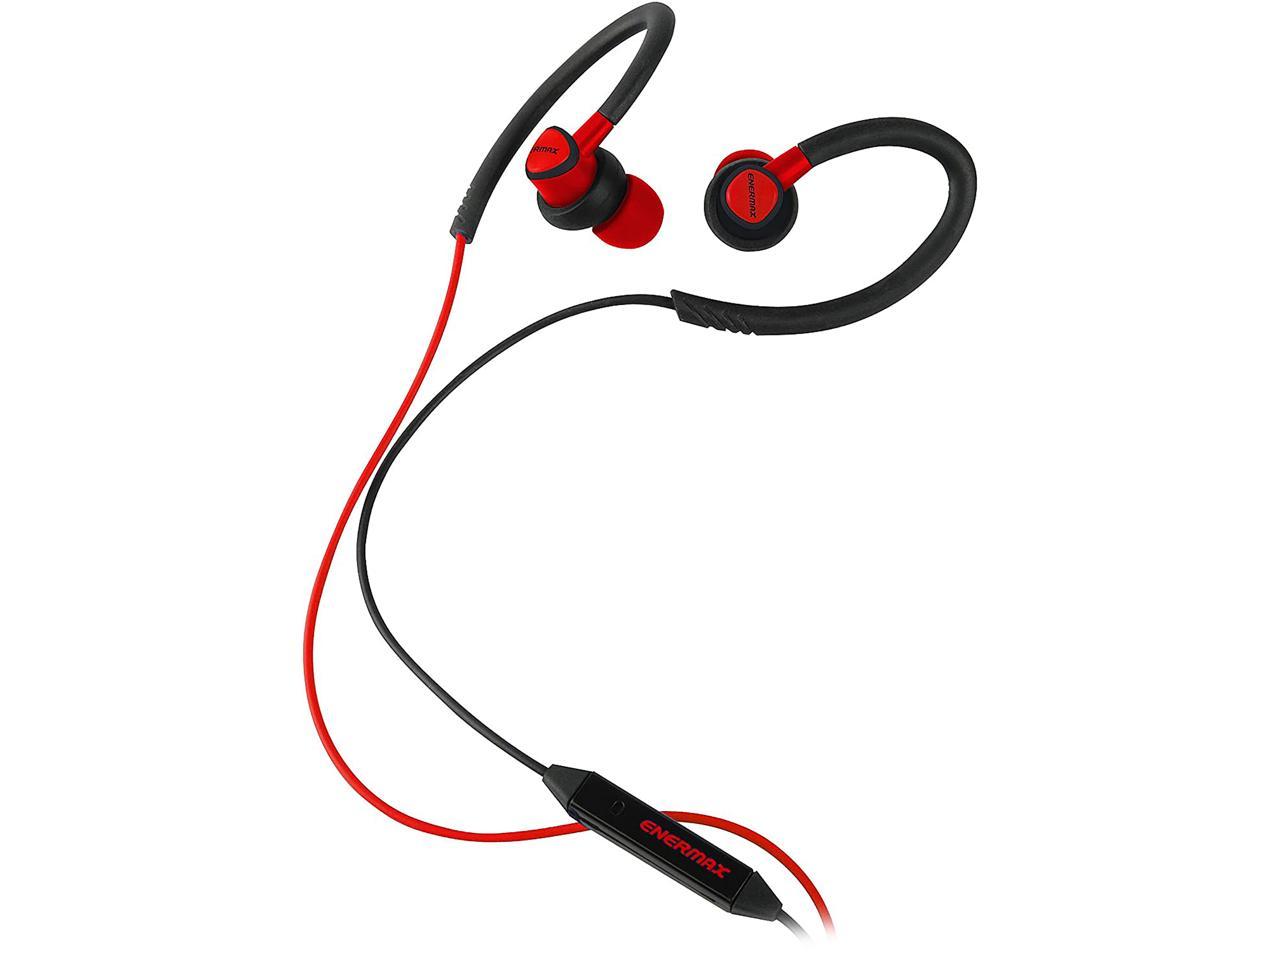 Newegg Enermax EAE01-R Outdoor Active Sports Wired Earphones FAR ($15 rebate) Blue or Red